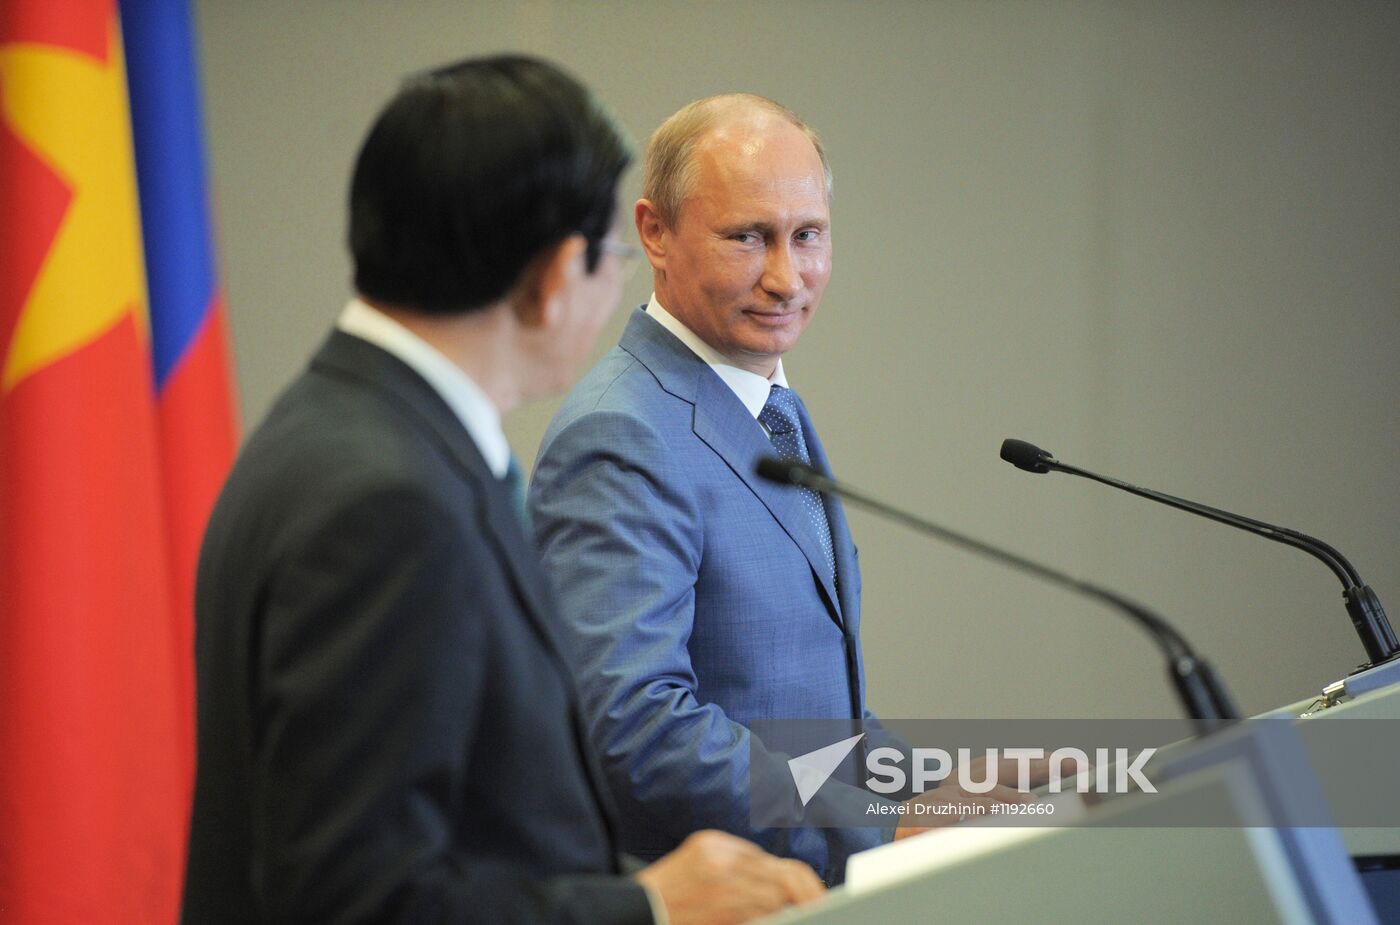 President Putin meets with Truong Tan Sang